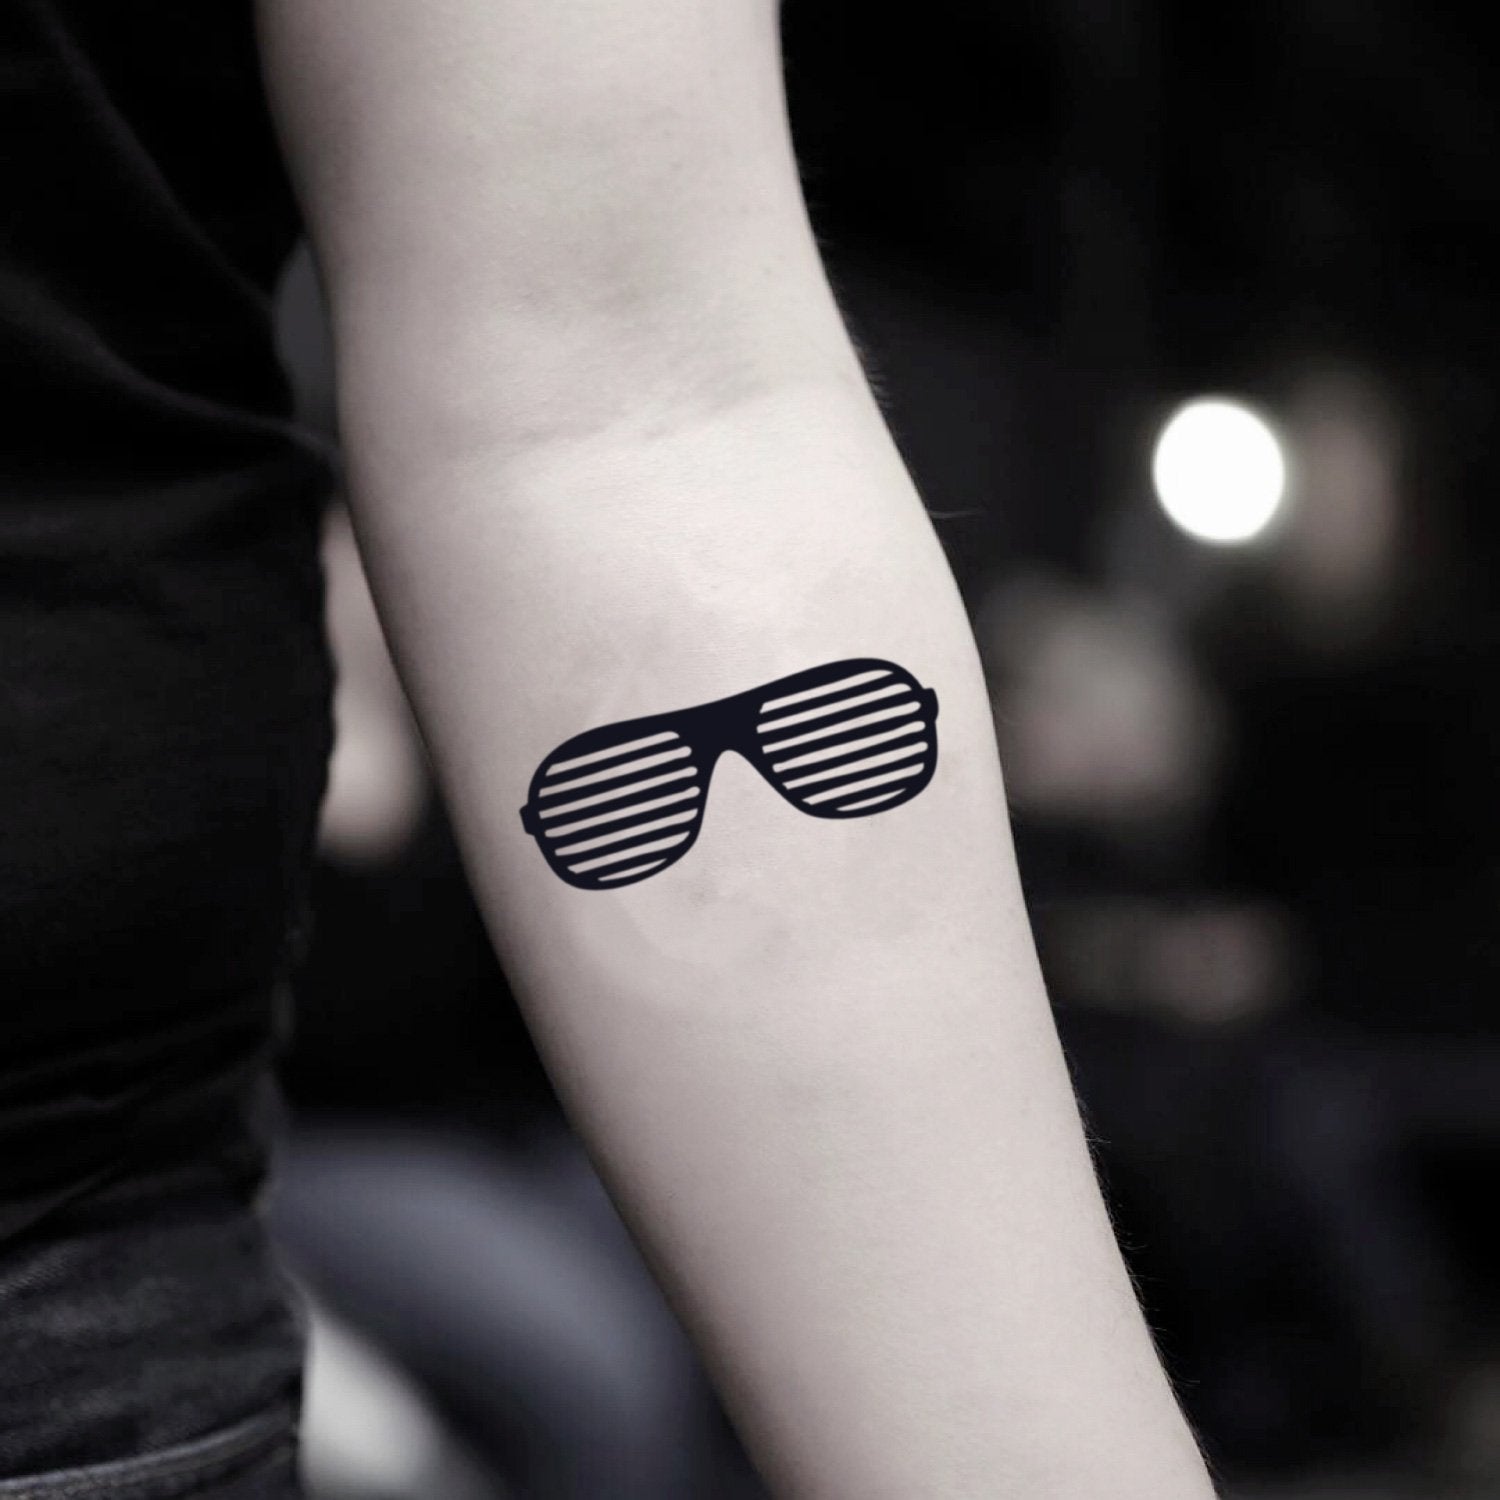 fake small sunglasses illustrative temporary tattoo sticker design idea on inner arm